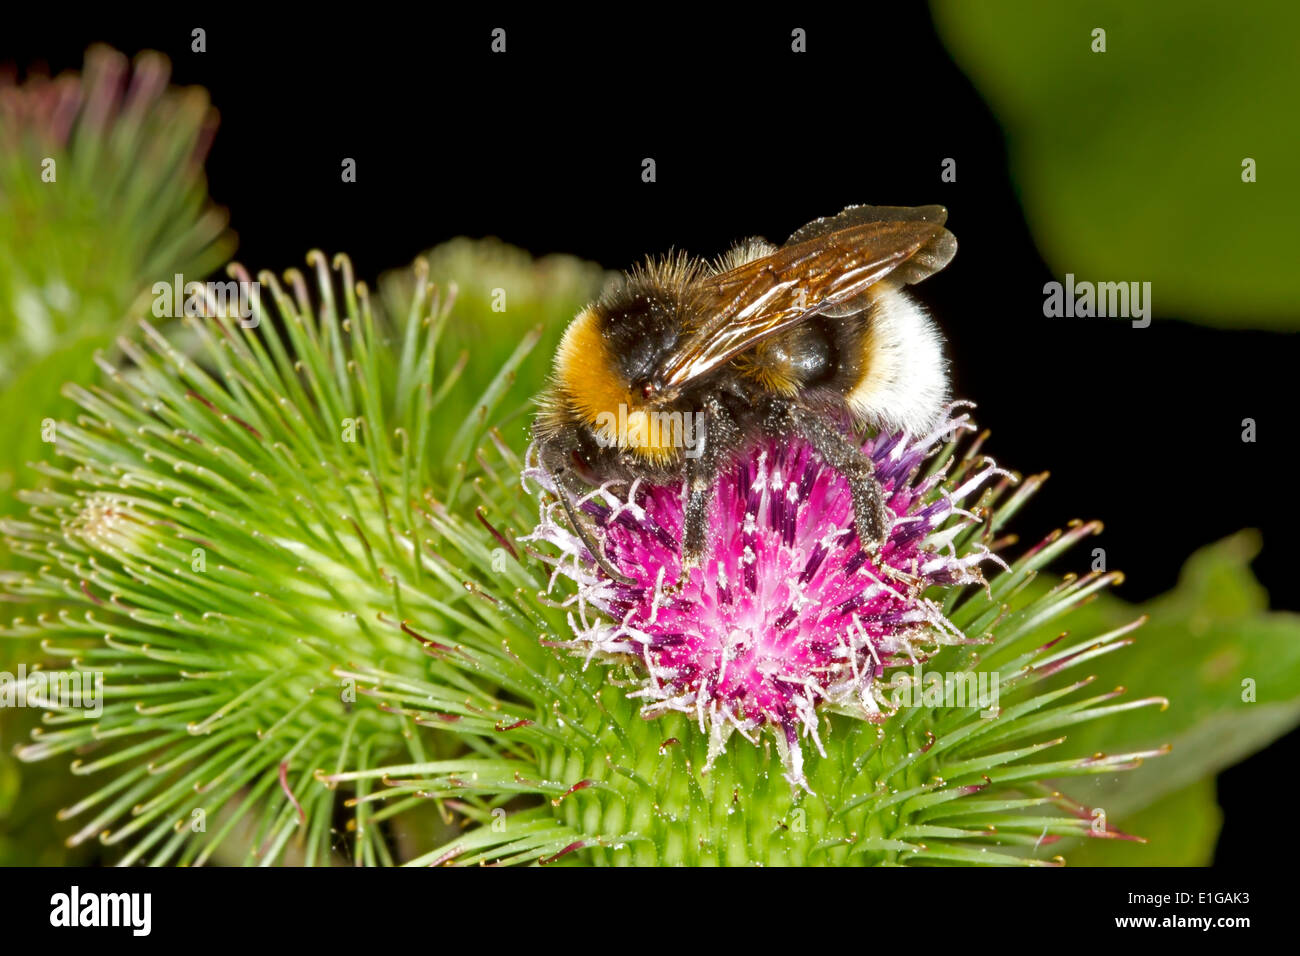 Barbut's Cuckoo Bumblebee - Bombus barbutellus Stock Photo